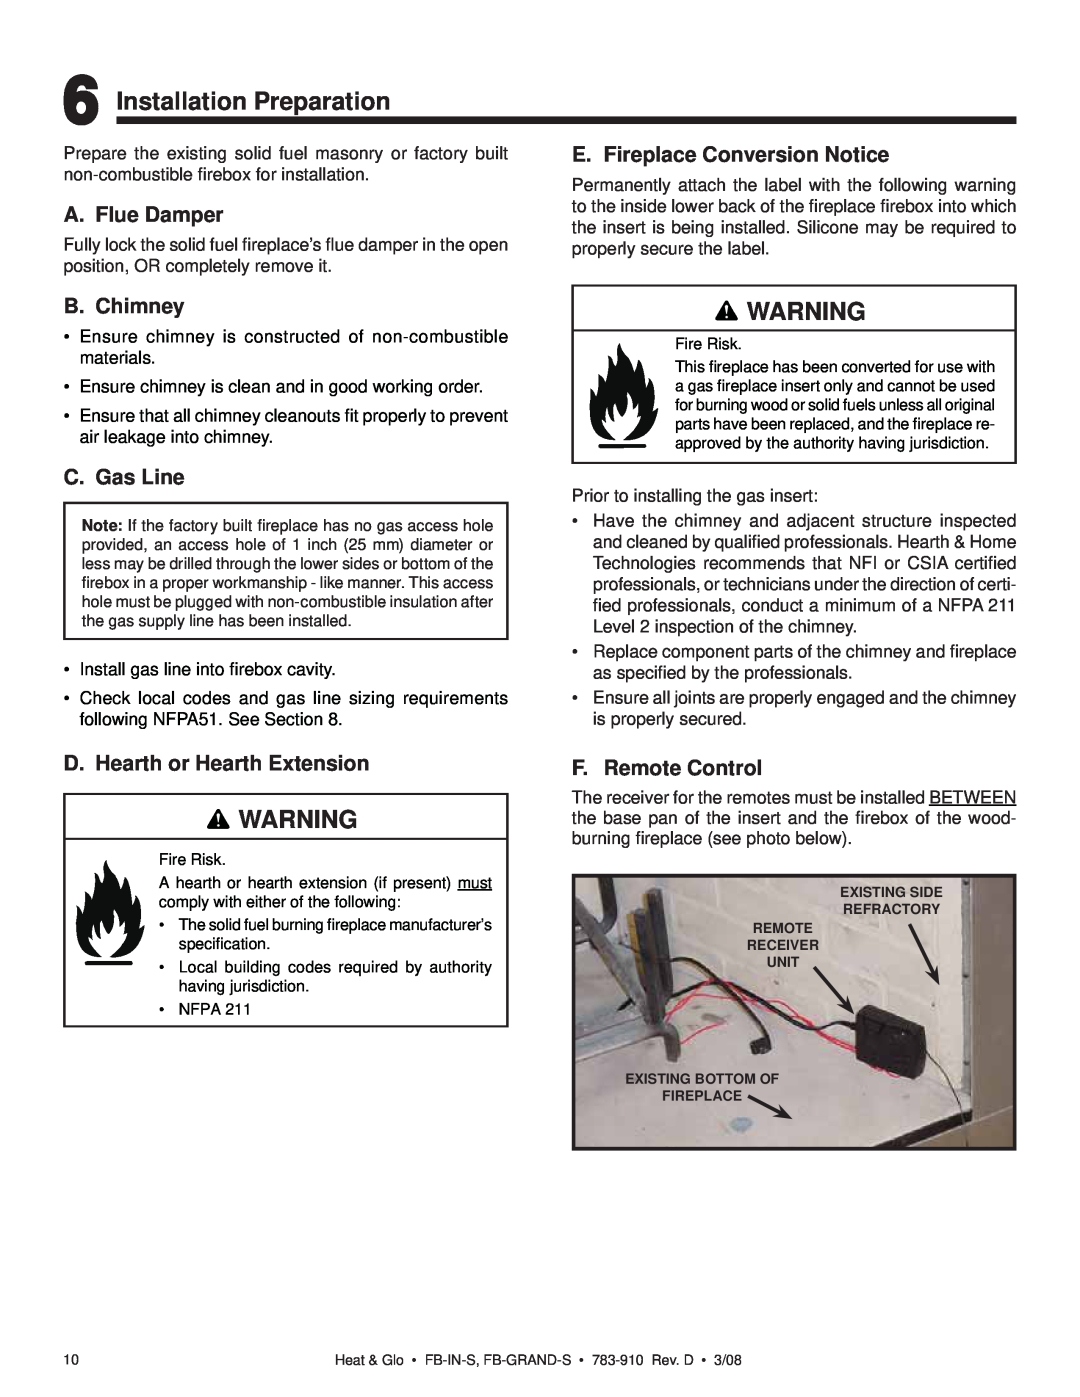 Heat & Glo LifeStyle FB-GRAND-S Installation Preparation, A. Flue Damper, E. Fireplace Conversion Notice, B. Chimney 